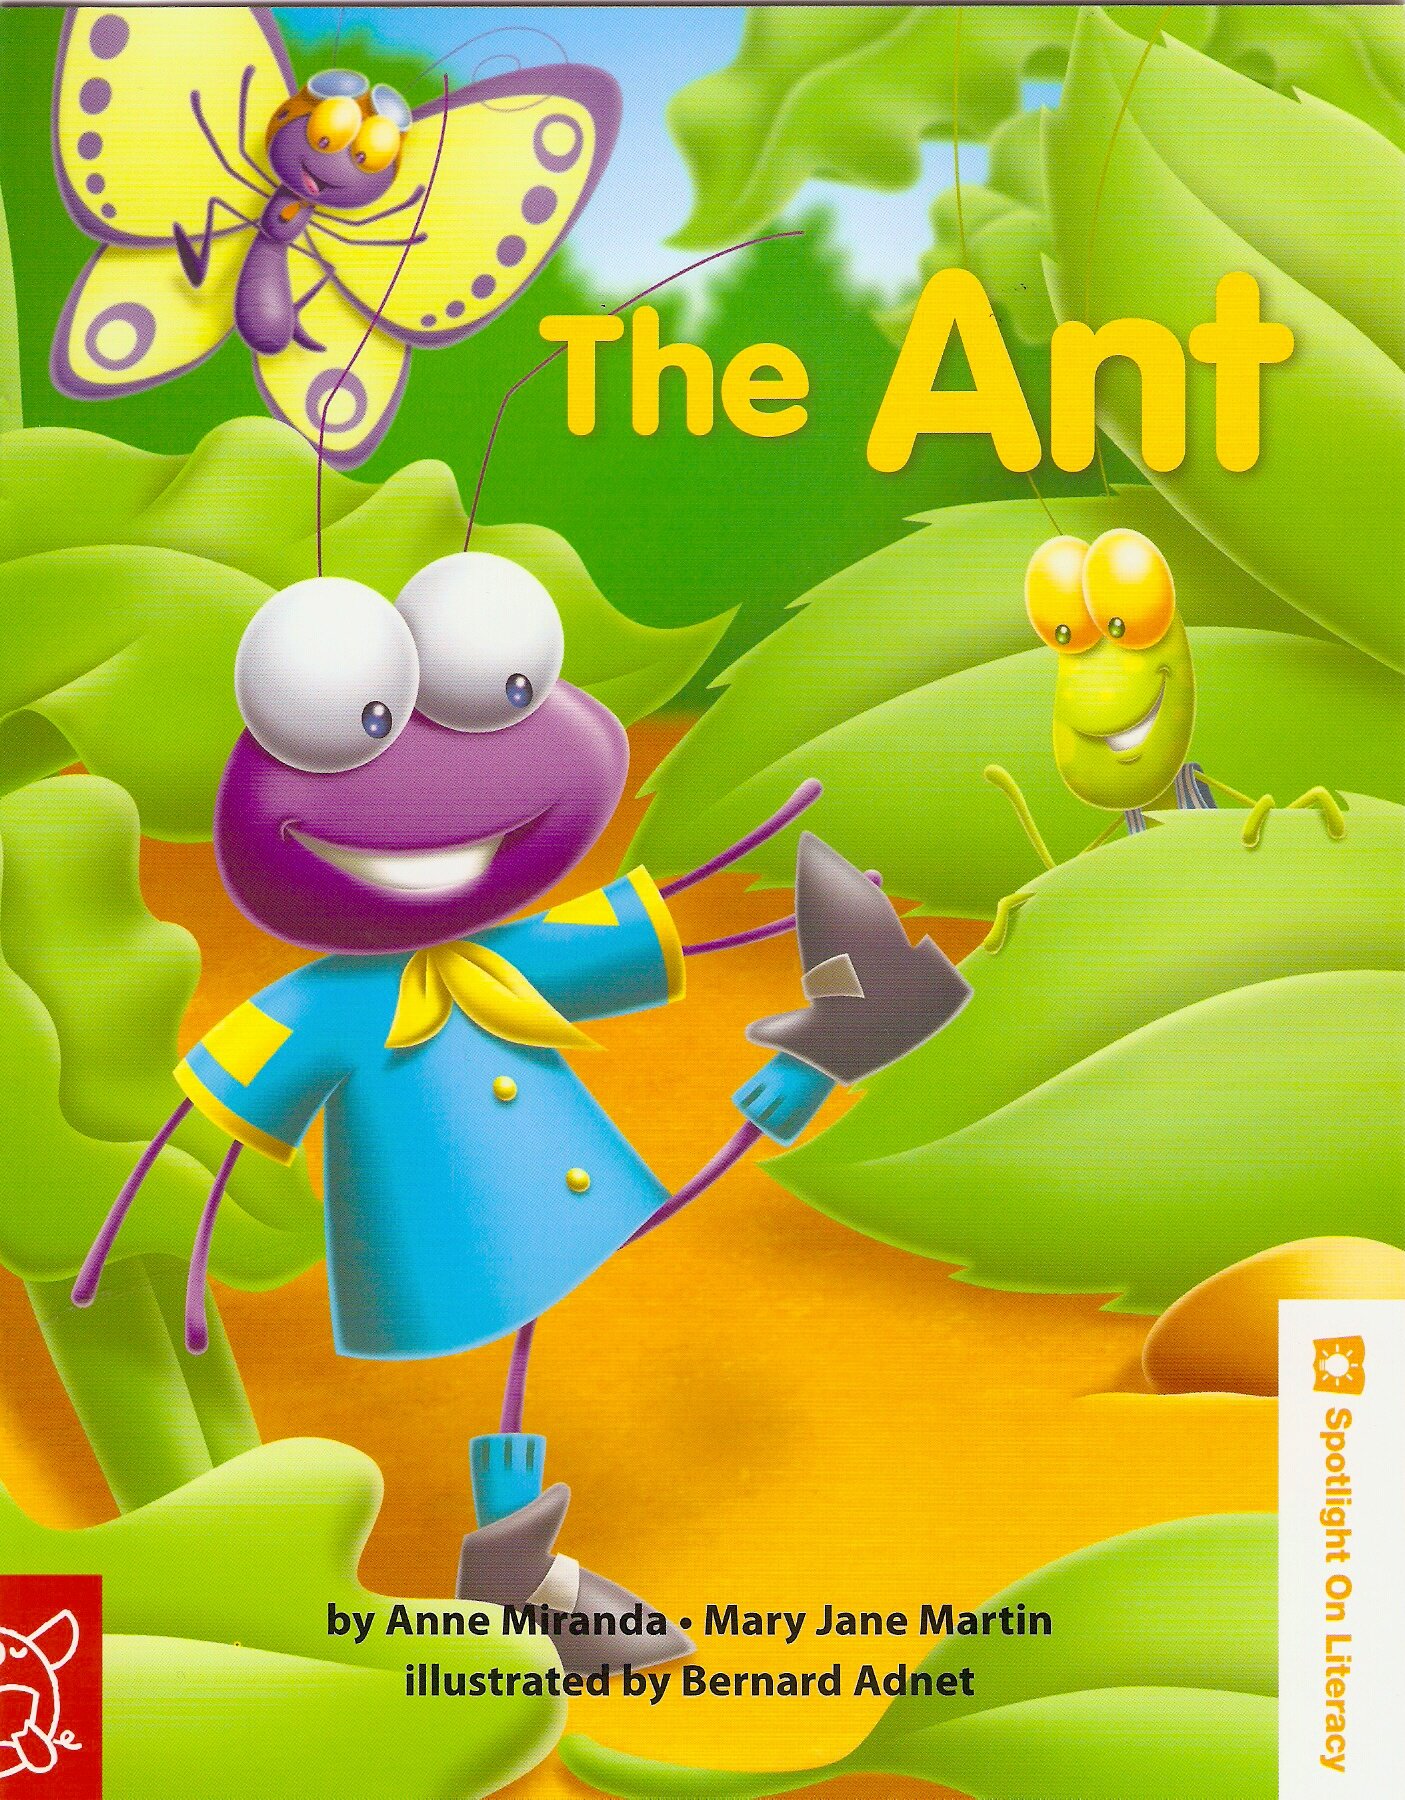 The Ant (2).jpg